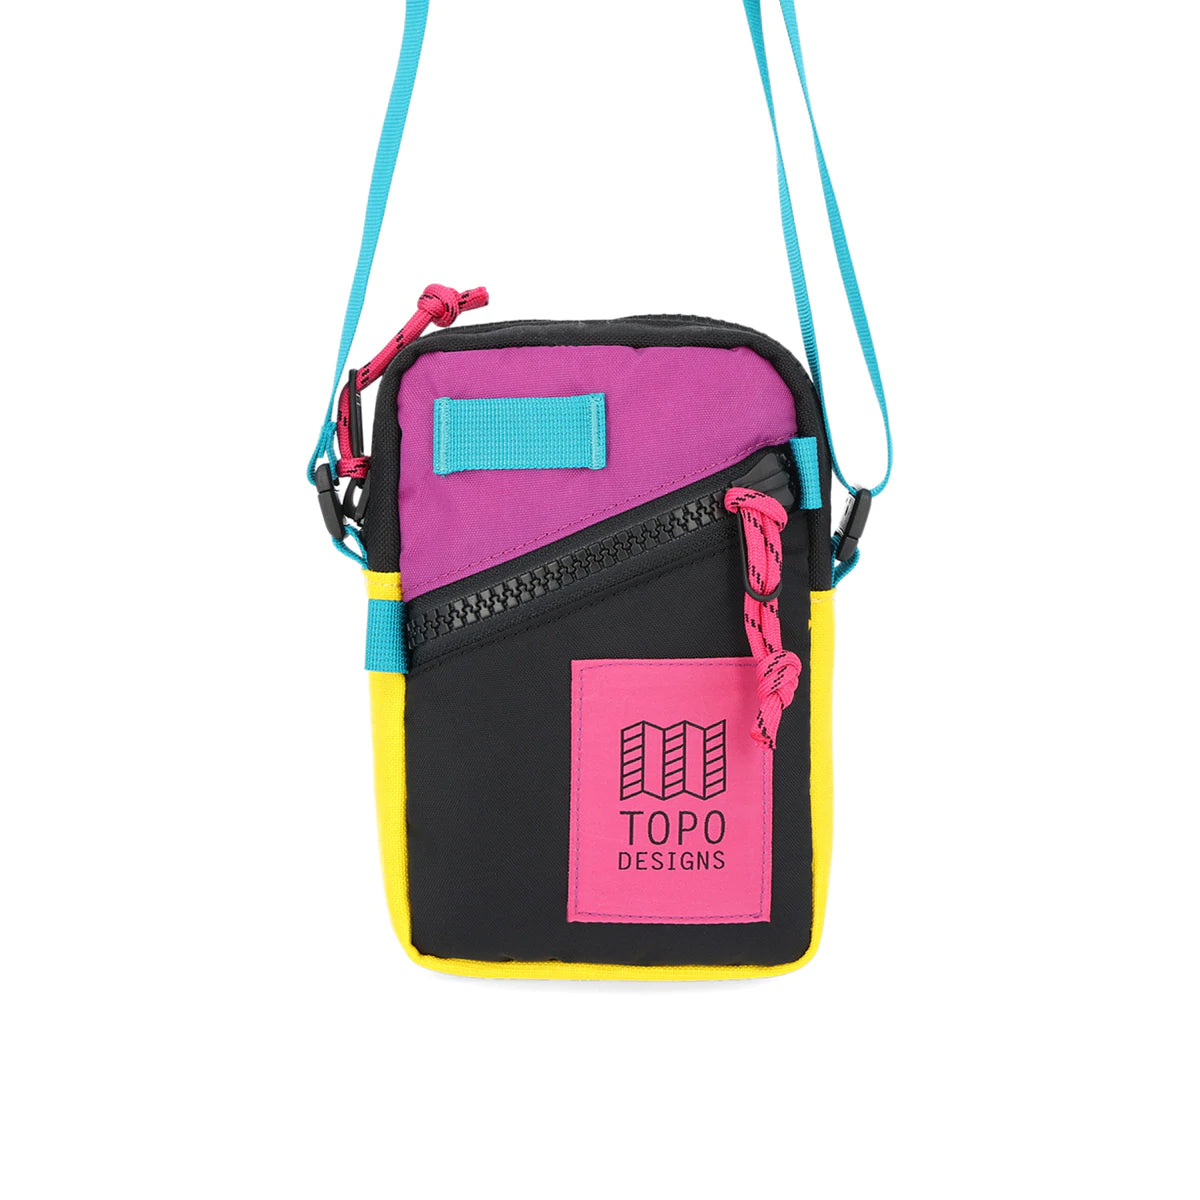 Topo Designs : Mini Shoulder Bag : Black/Grape